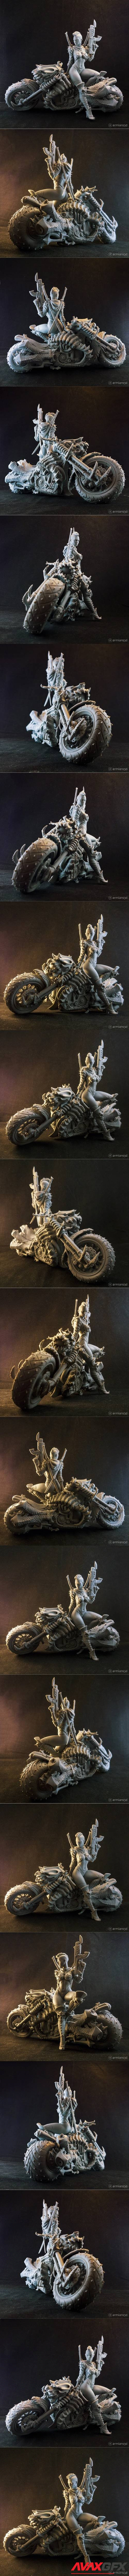 Cyber Metal Biker – 3D Printable STL